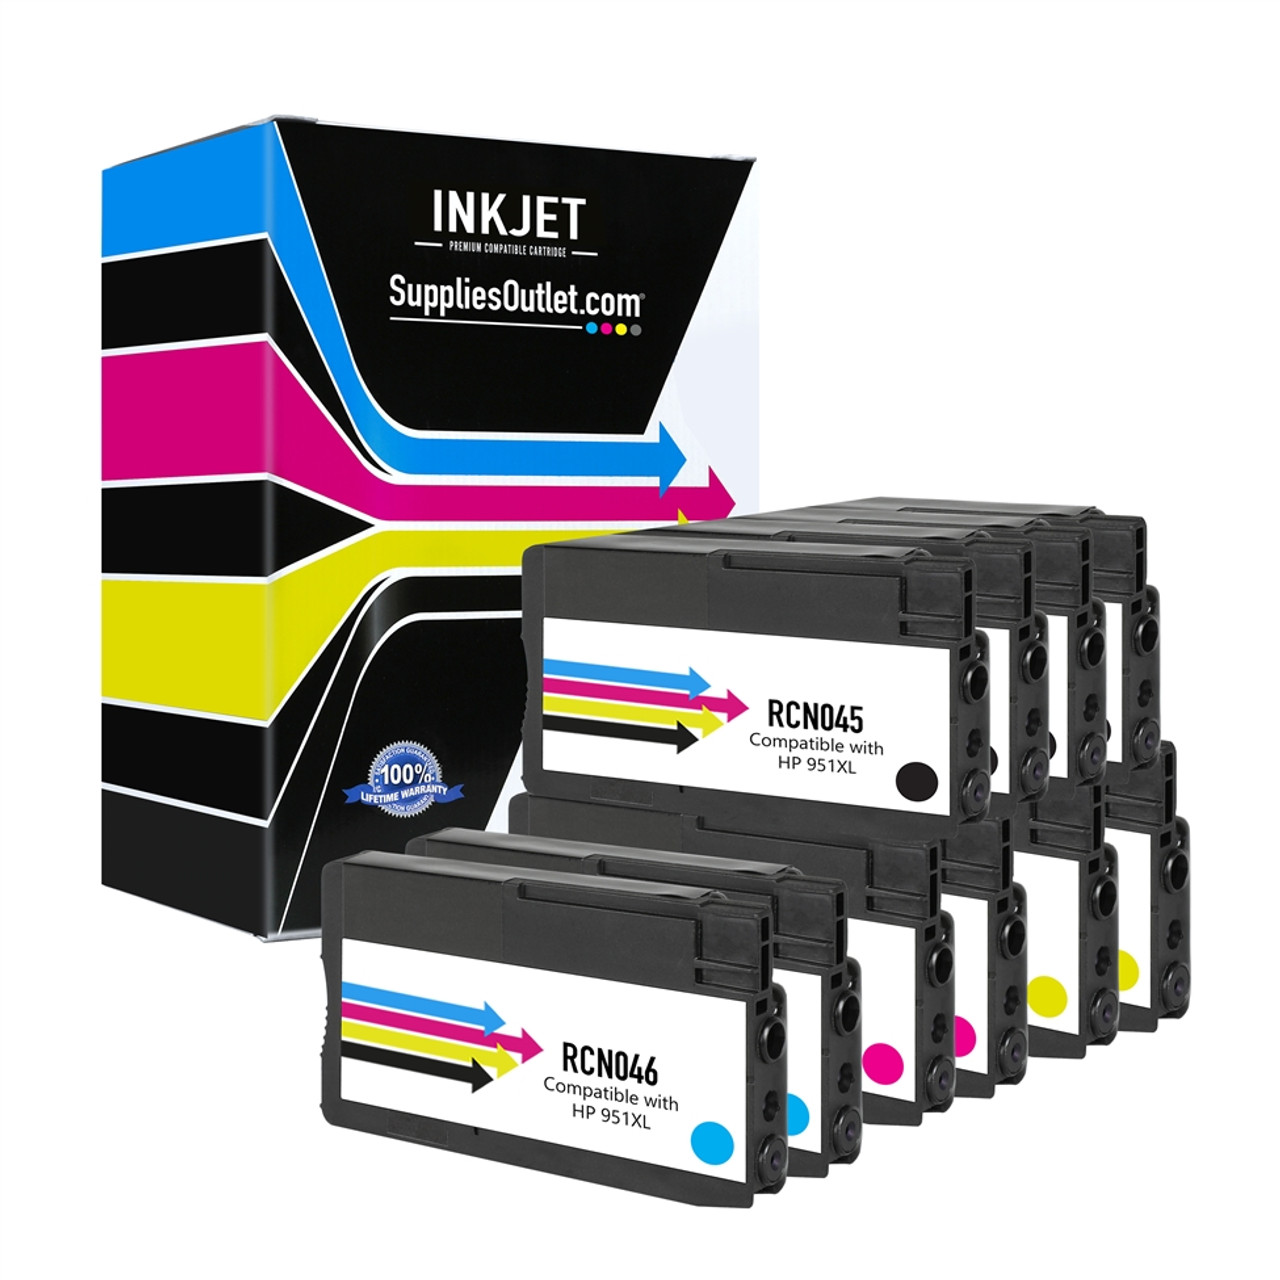 Arne Word gek eeuw Compatible HP 950XL / 951XL Ink Cartridge (All Colors) by SuppliesOutlet